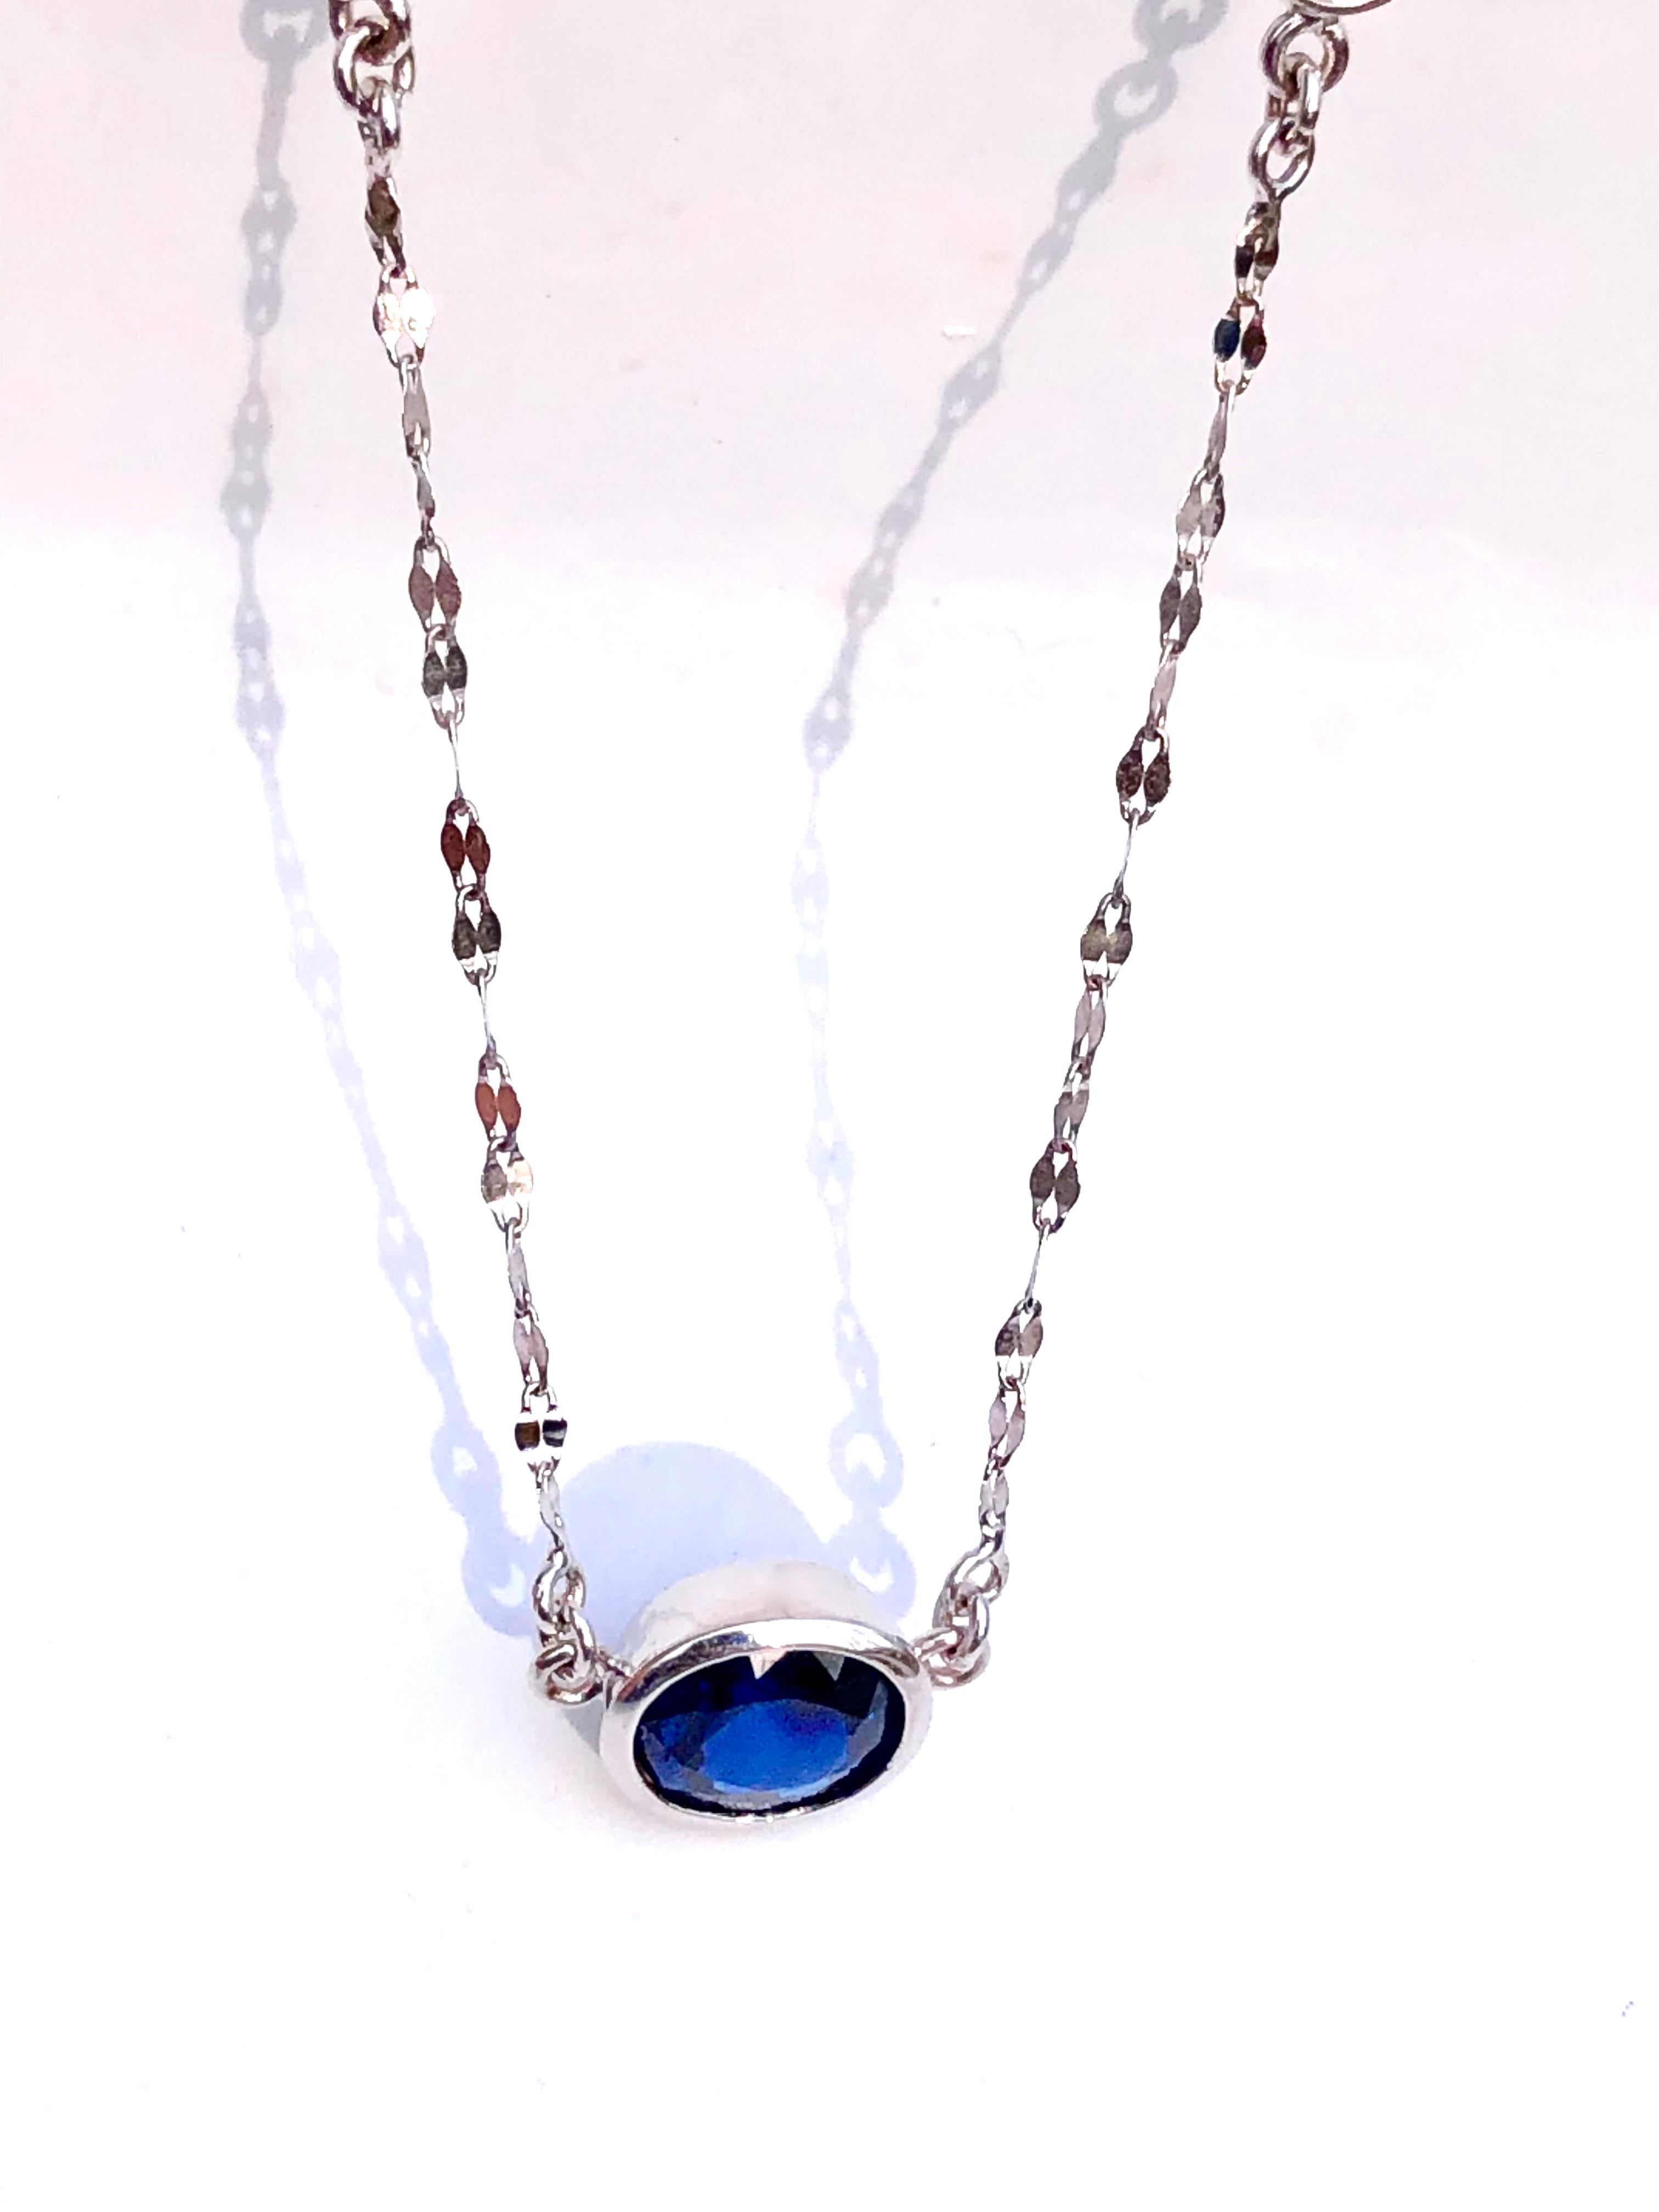 3.17 Carat Oval Shape Blue Sapphire and Diamond Solitaire Pendant Necklace For Sale 1